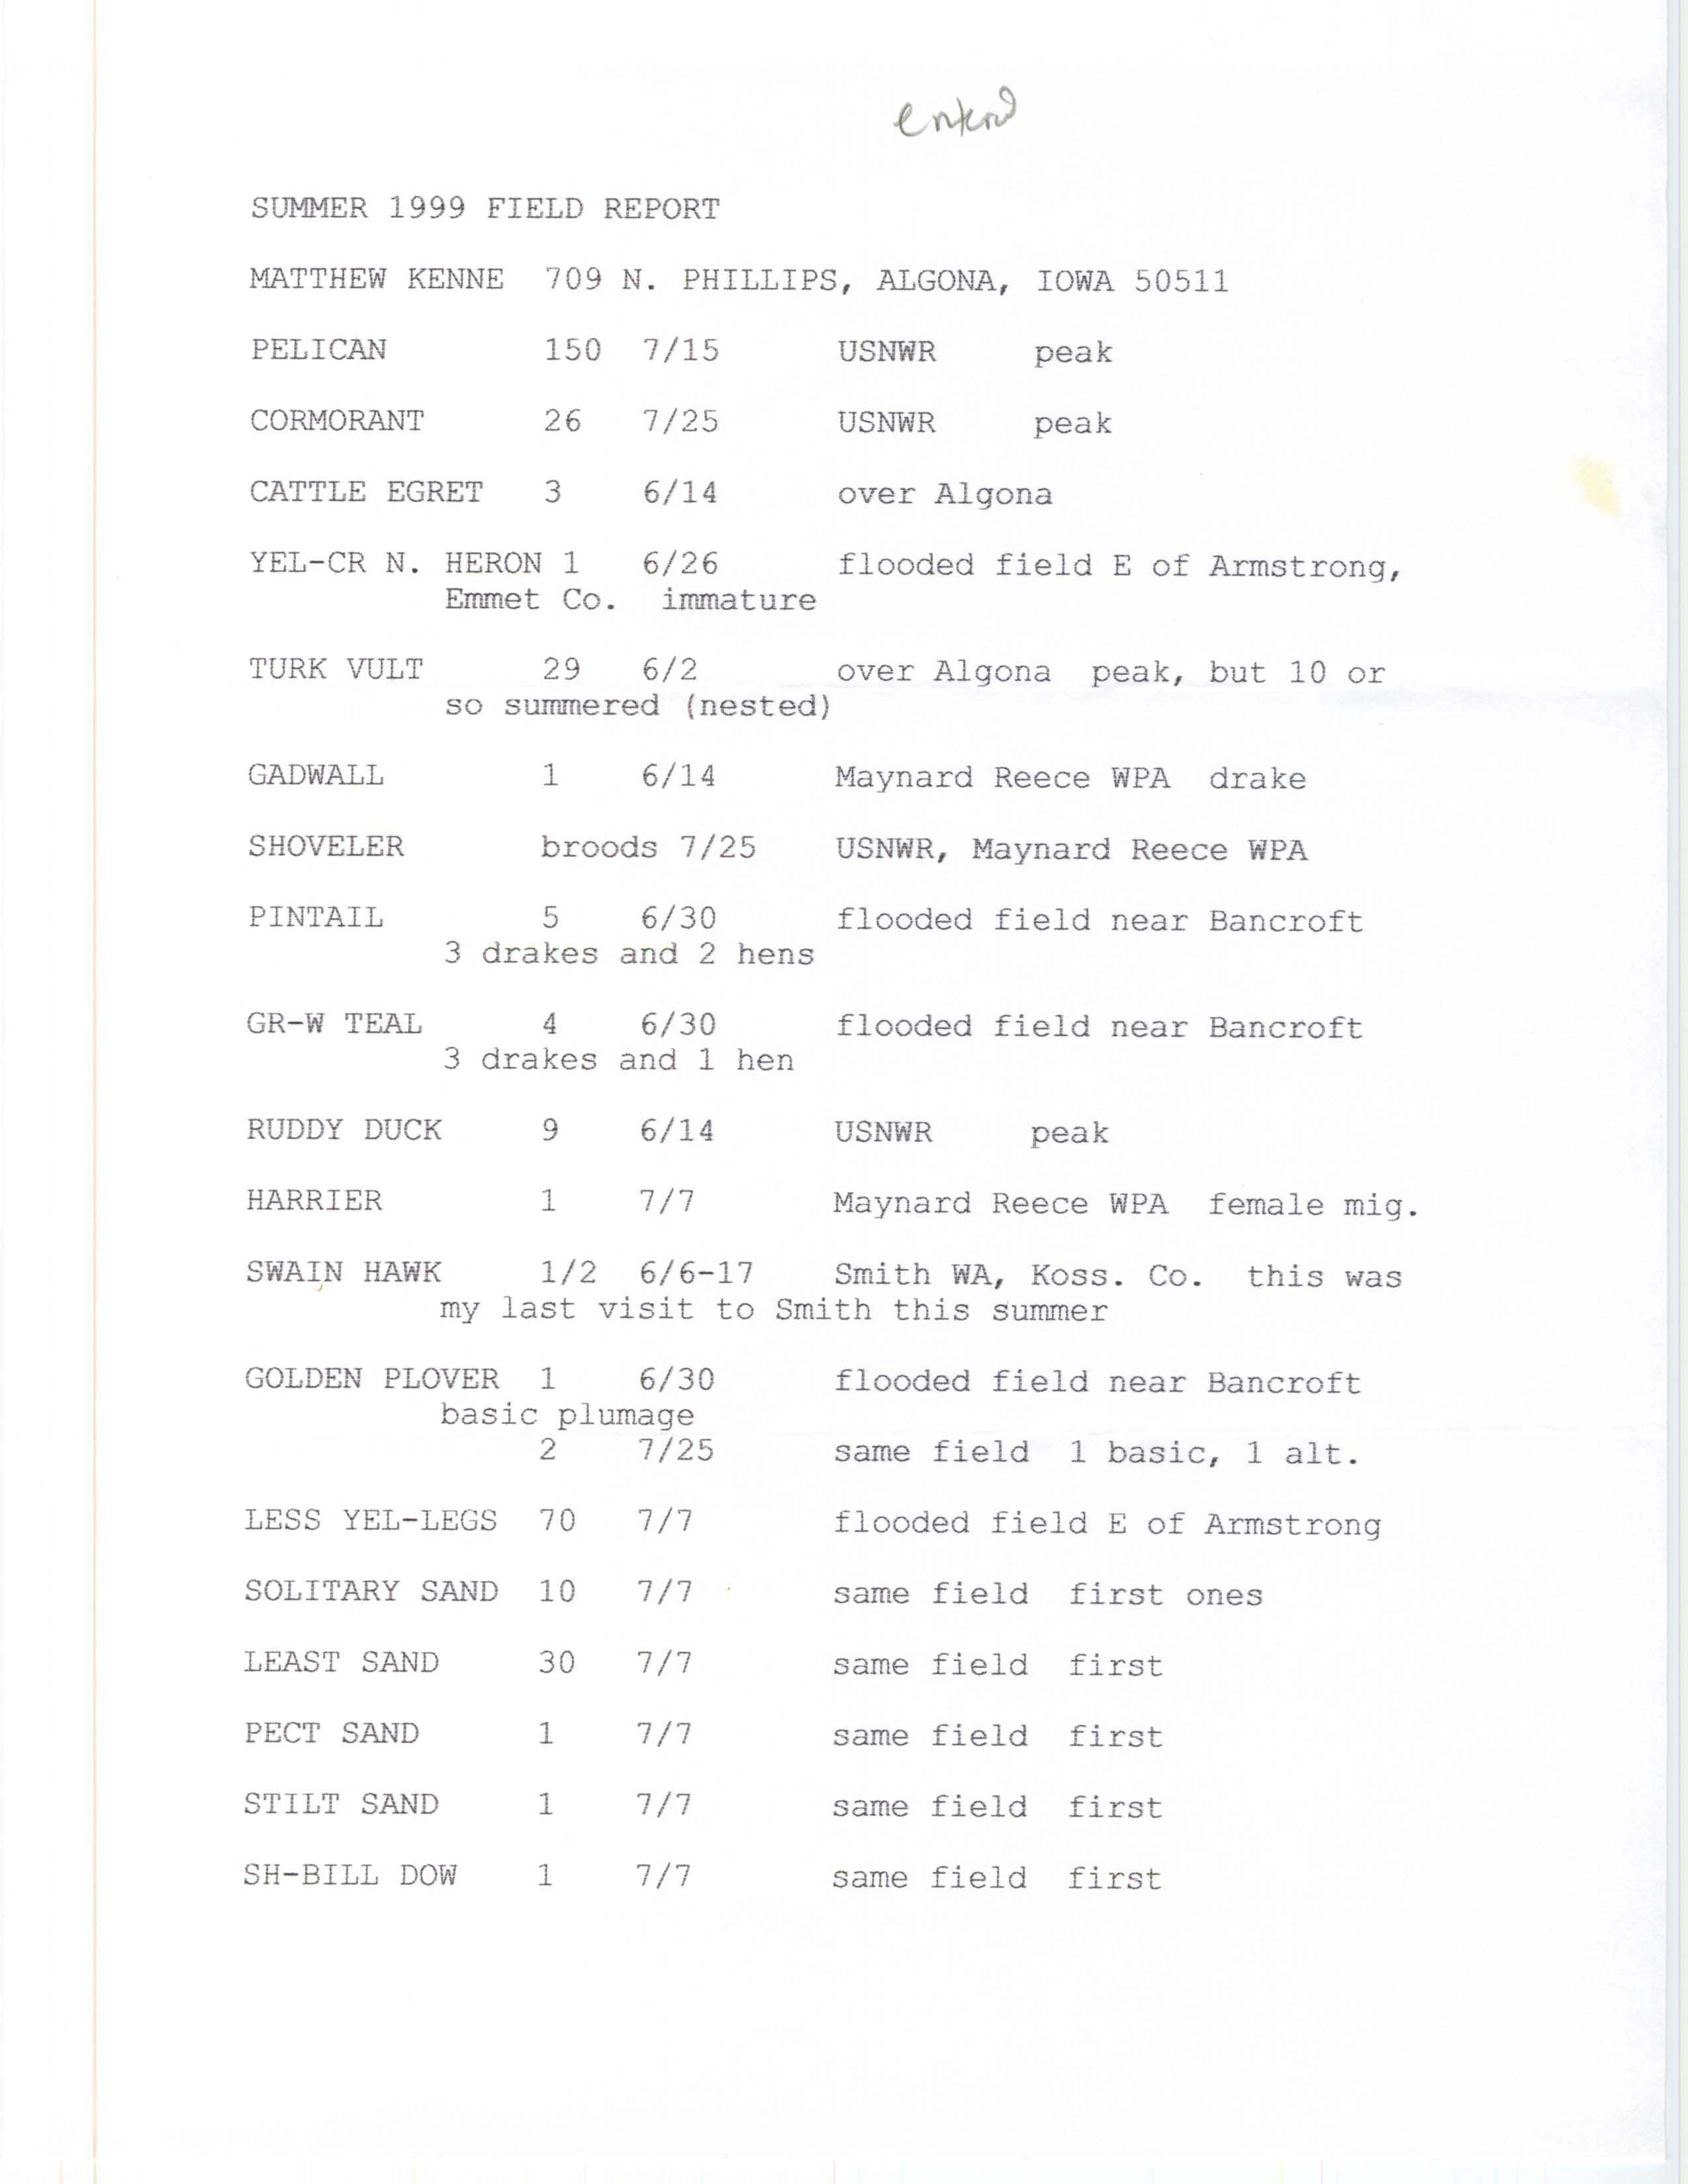 Summer 1999 field report, Matthew Kenne